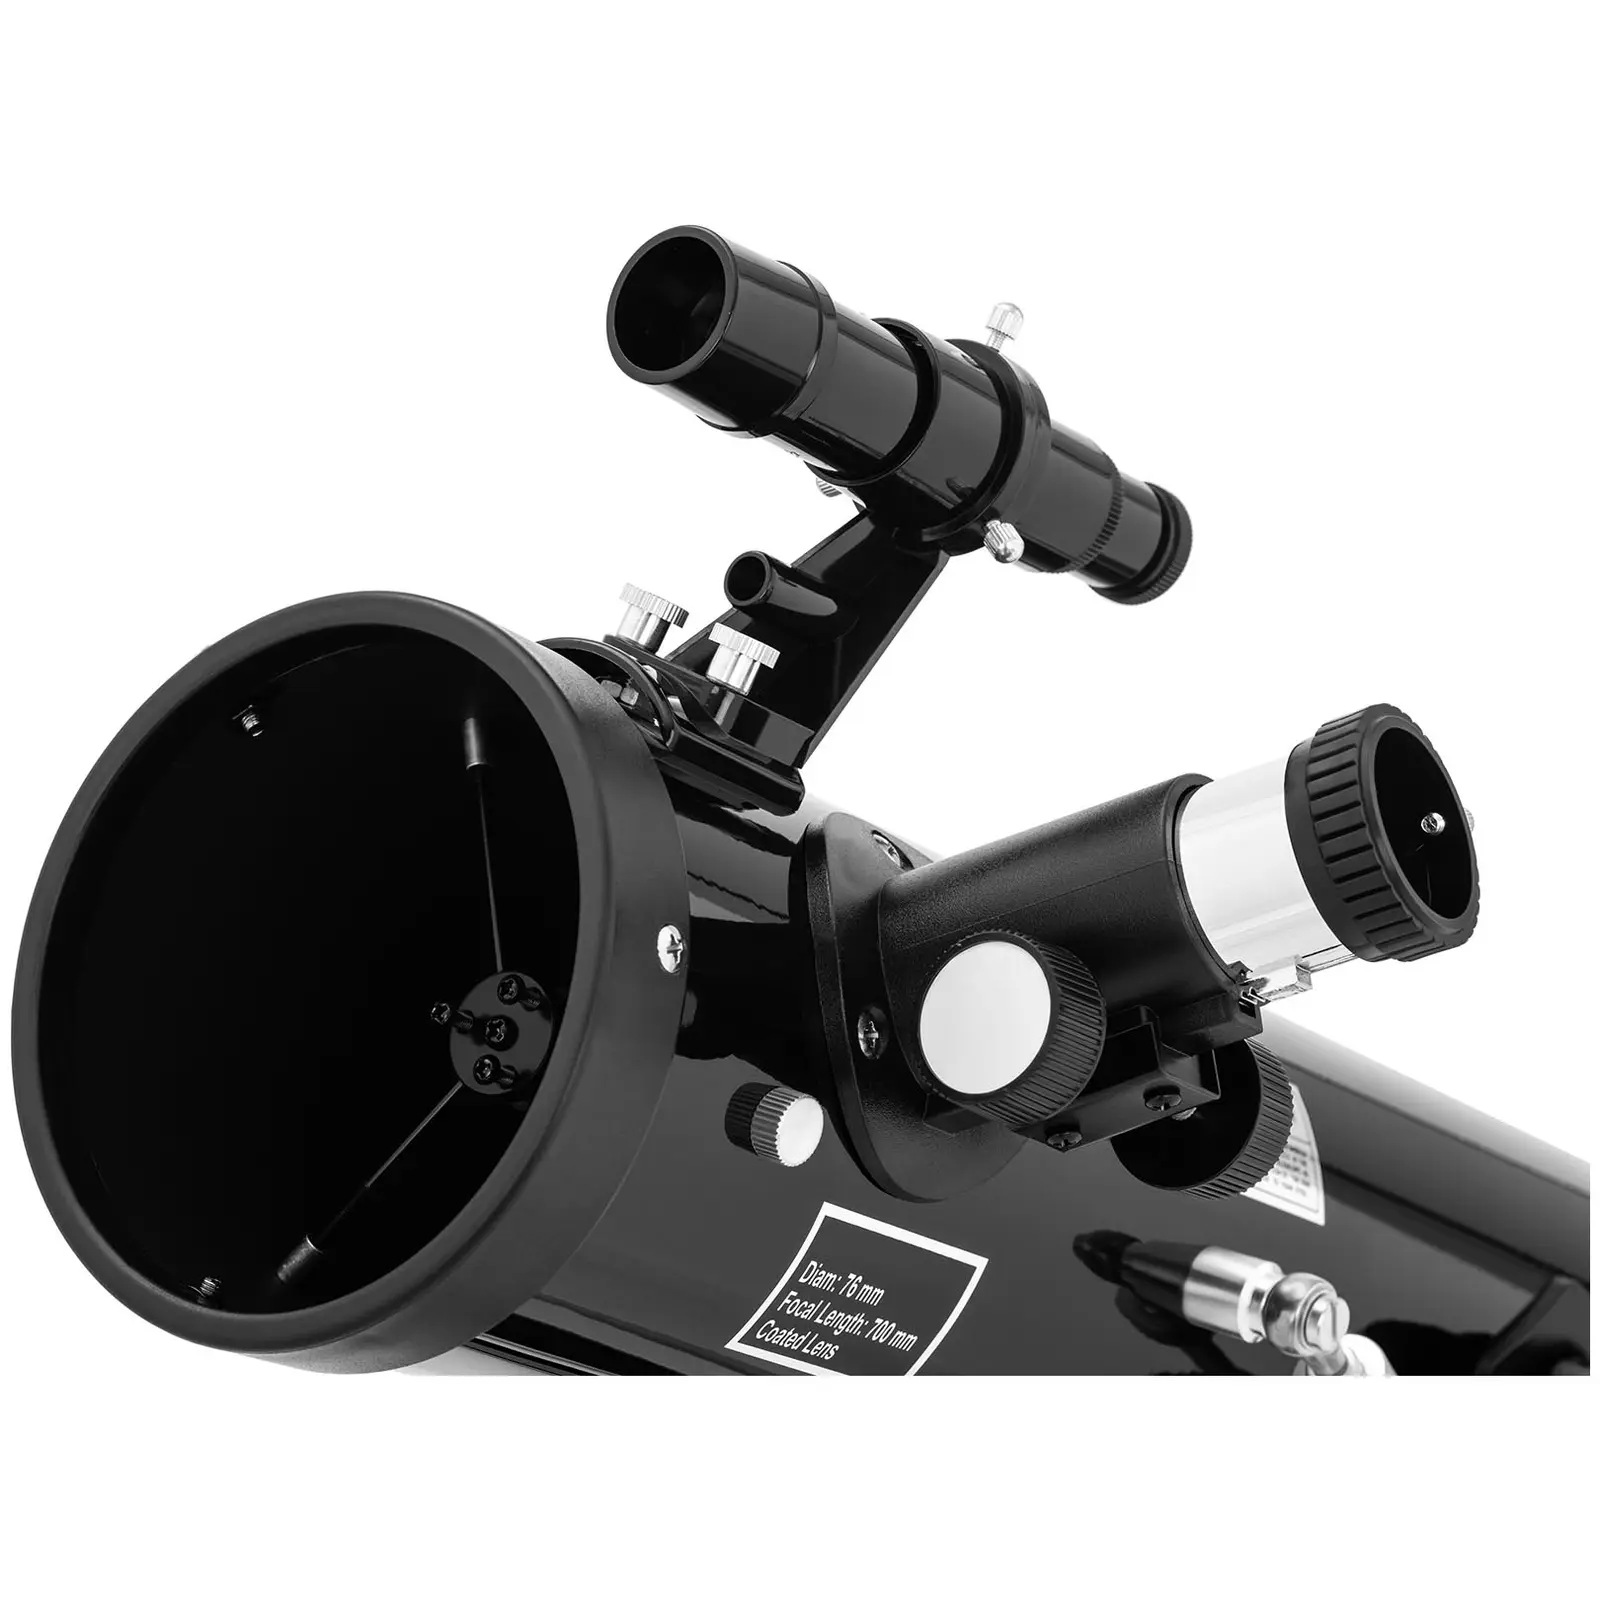 Teleskop - Ø 76 mm - 900 mm - stativ